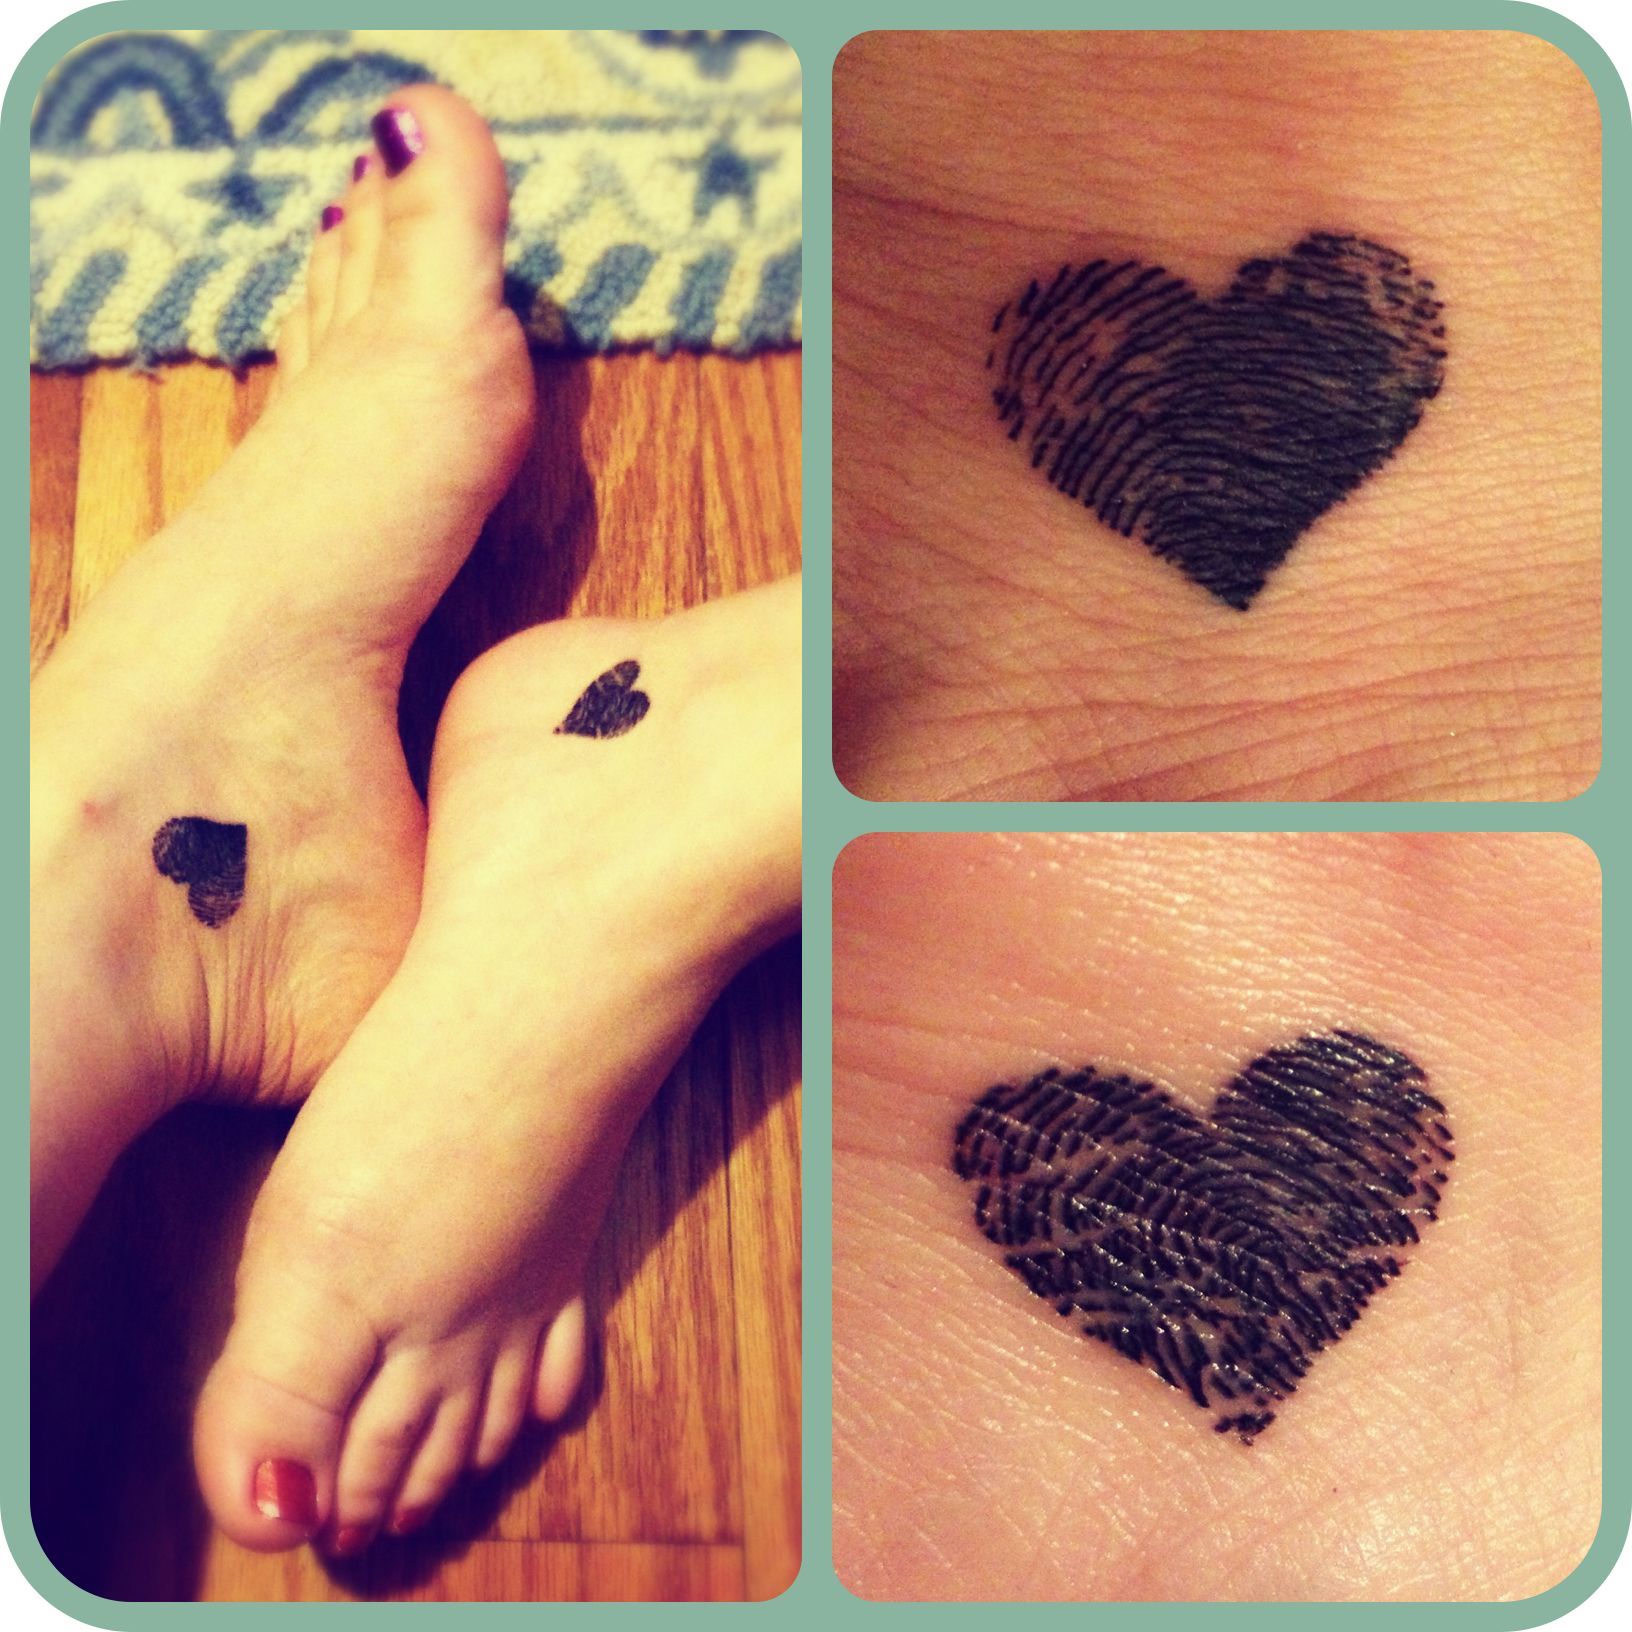 Matching sister fingerprint heart tattoos but I think I would do with my kids’ fingerprints instead